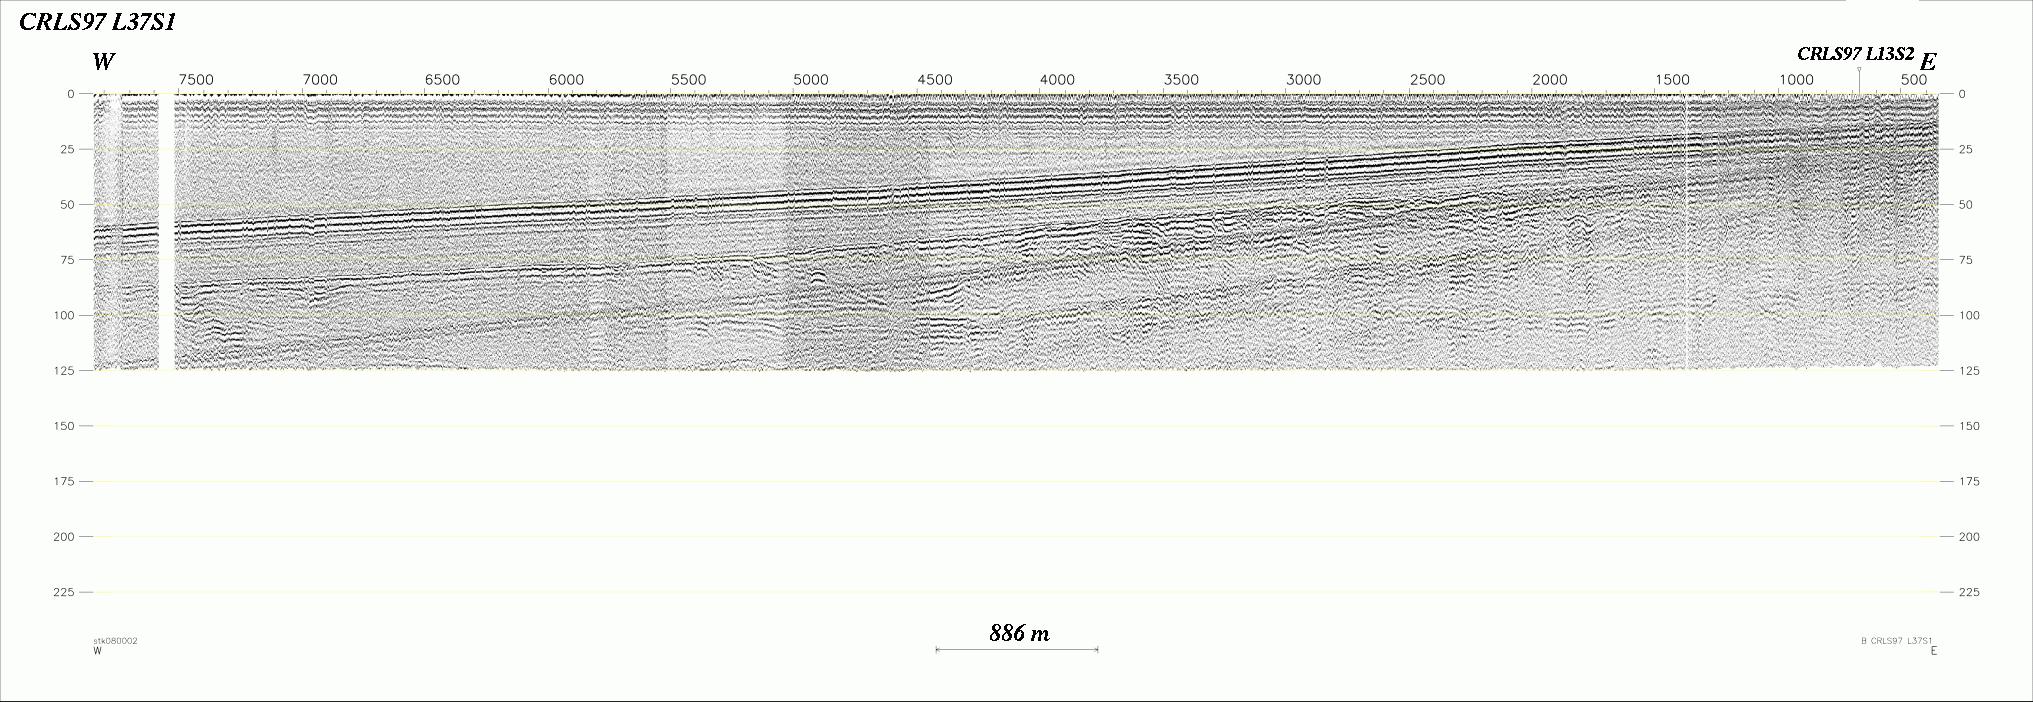 Seismic Reflection Profile Line No.: L37s1 (266850 bytes)